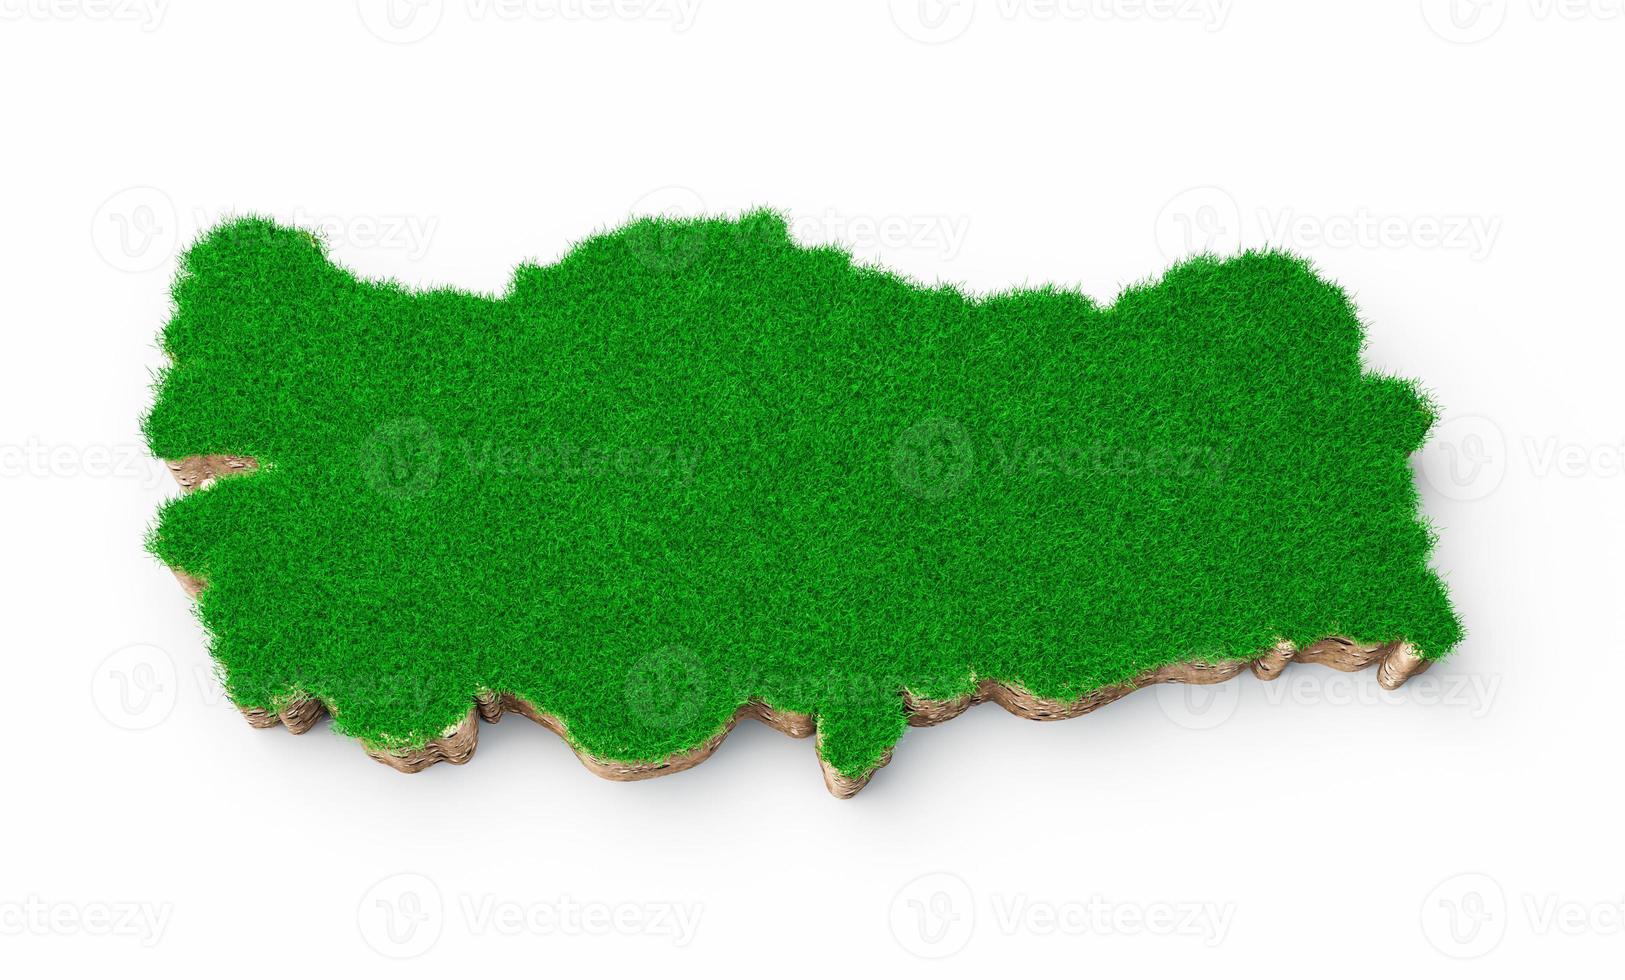 türkei karte boden land geologie querschnitt mit grünem gras und felsen bodentextur 3d illustration foto